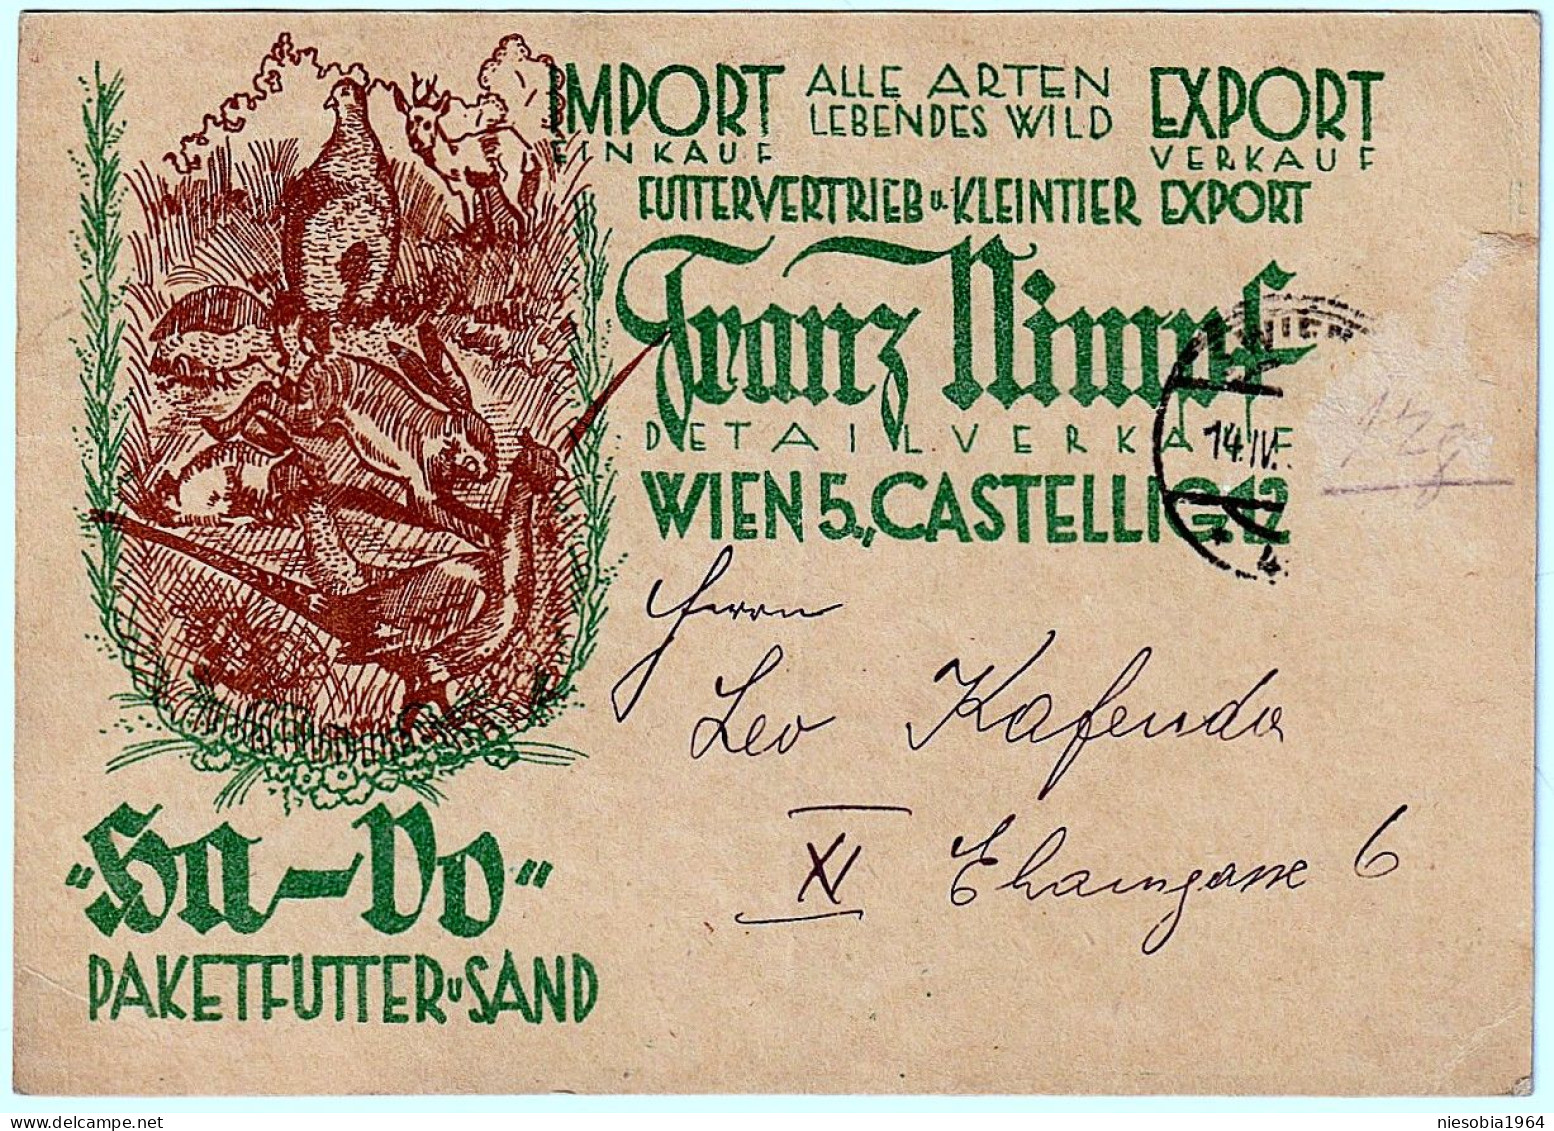 Franz Nimpf Wien Pet Shop Advertising Postkarte 14 IV 1934 - Cartes Postales